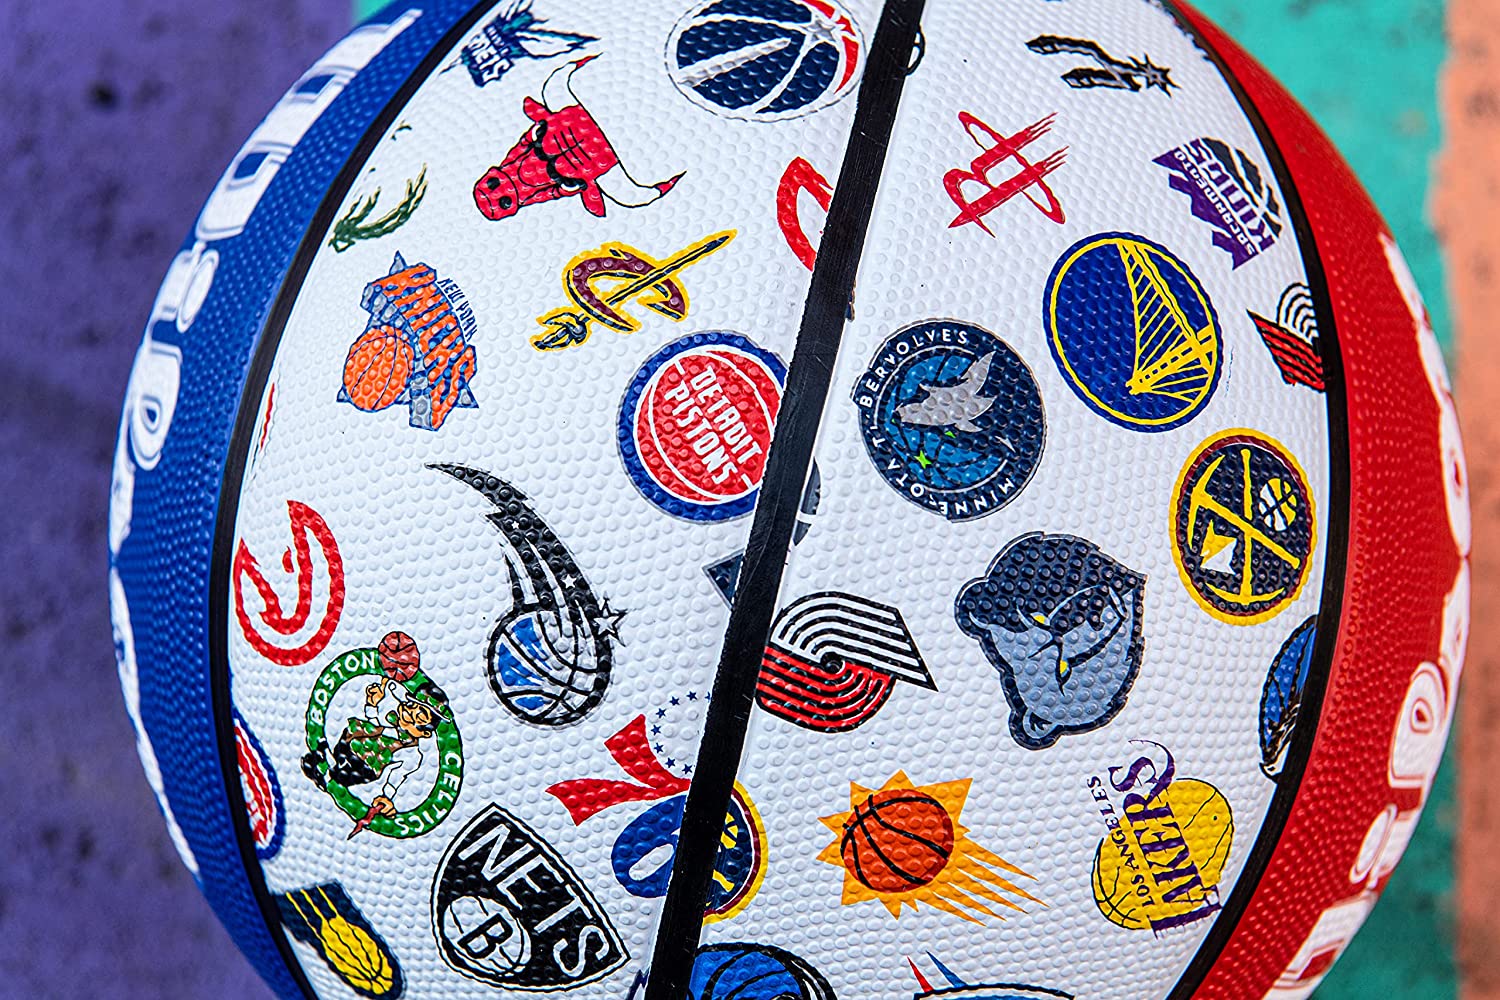 Wilson NBA All Team Basketball, Size 7 (White/Blue/Red) - Best Price online Prokicksports.com